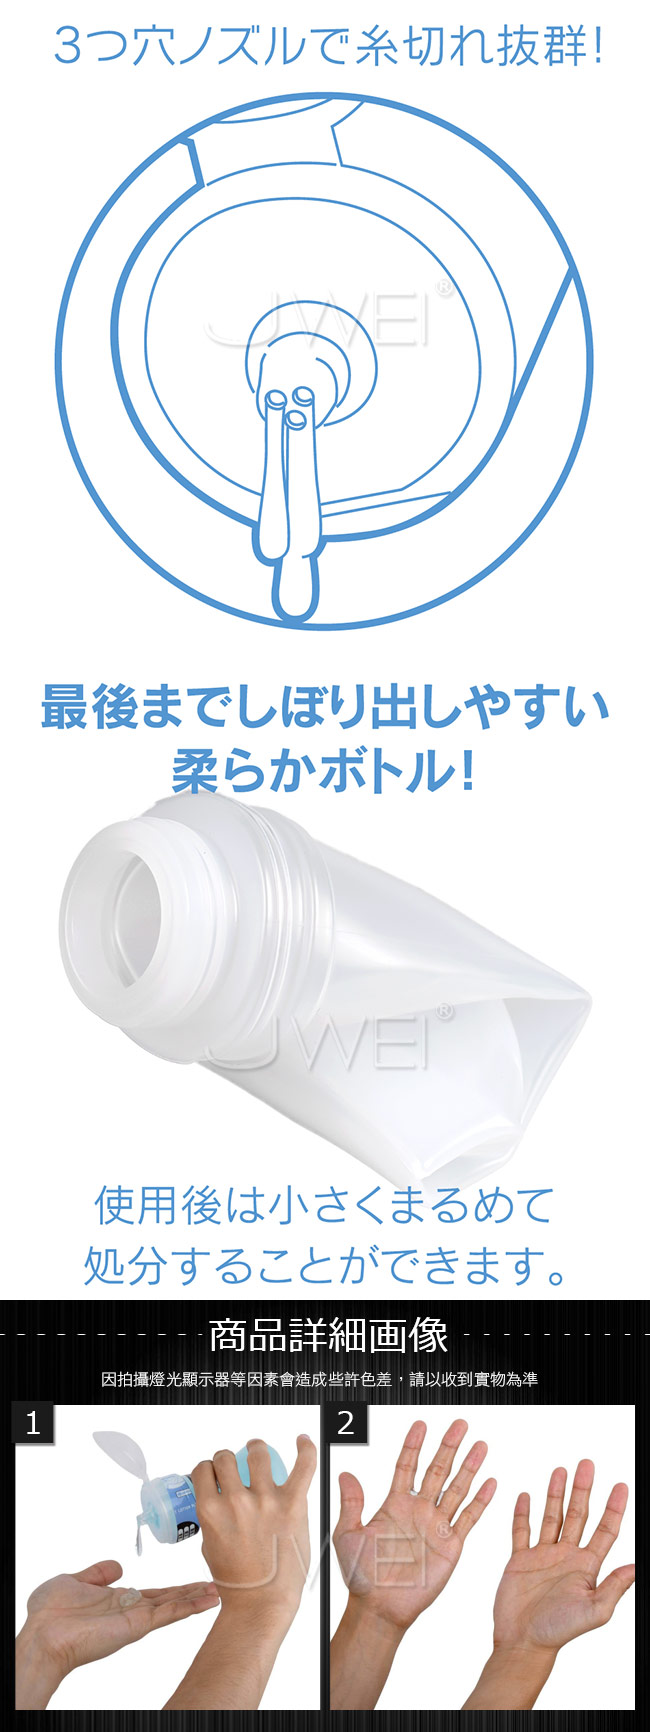 日本原裝進口EXE．EXCELLENT LOTION PLUS Ag+抗菌涼感型潤滑液-150ml